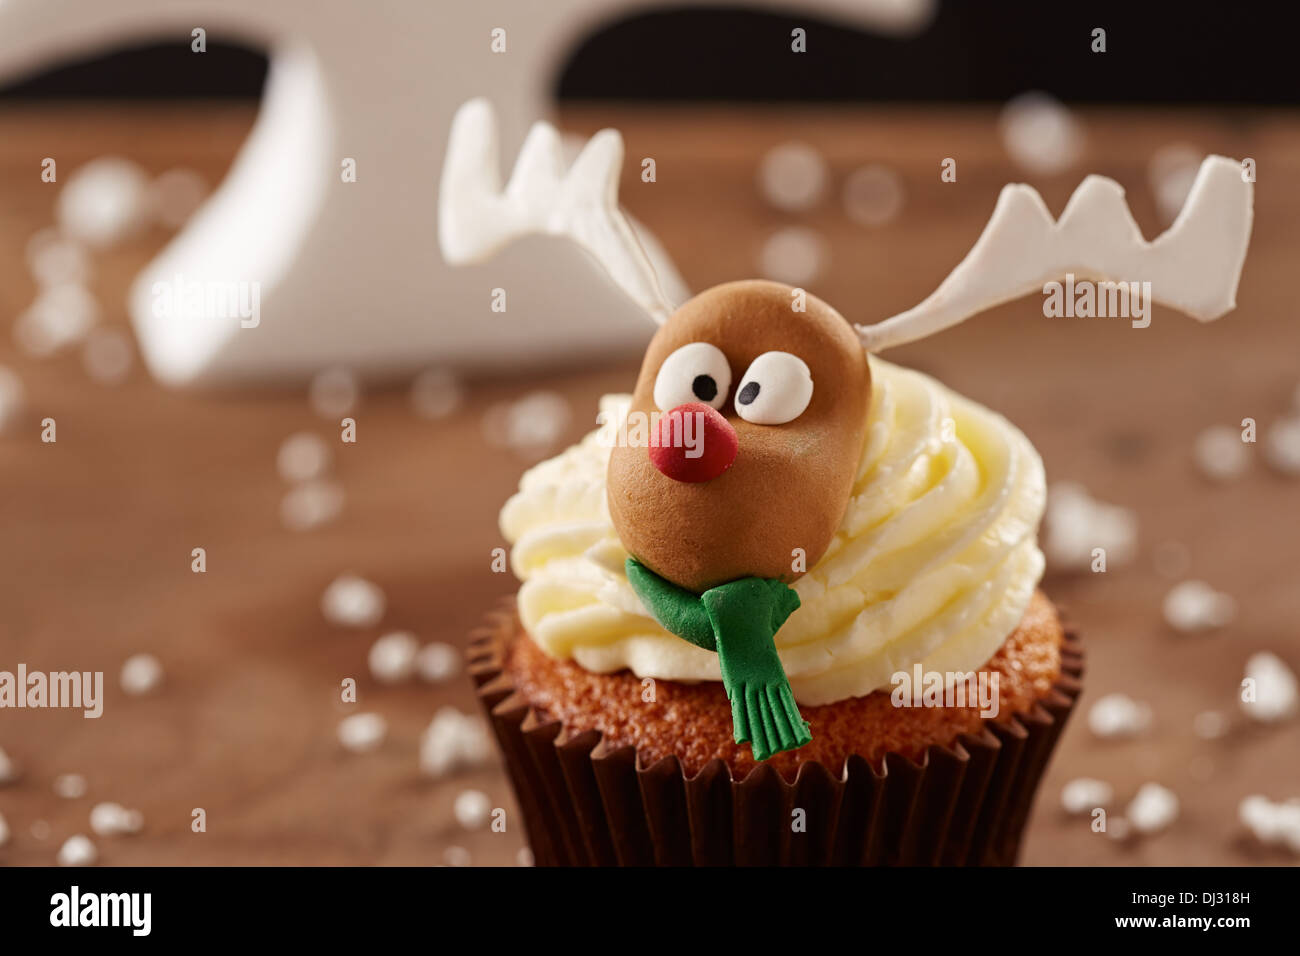 Rudolph reindeer cupcake on Christmas tree background Stock Photo